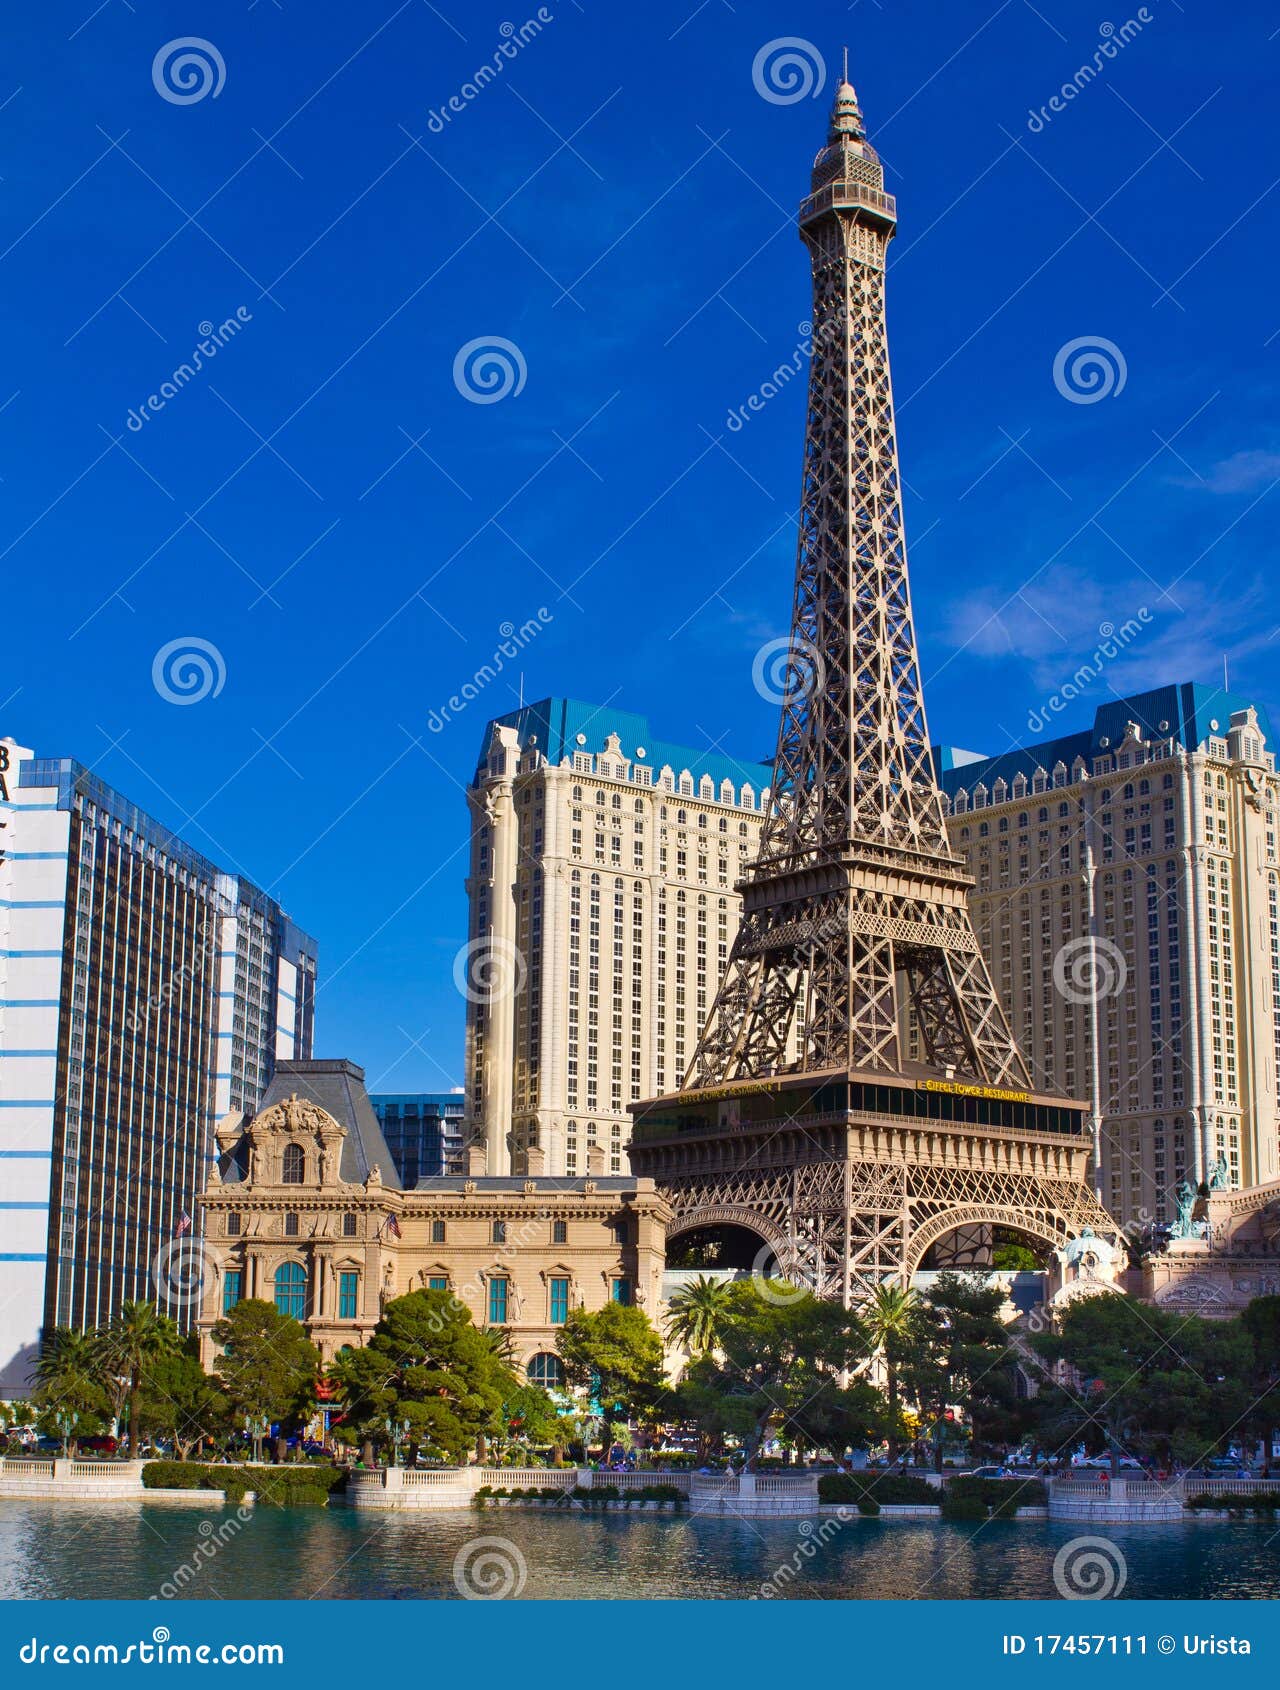 Eiffel Tower Replica at Paris Hotel and Casino Editorial Photo